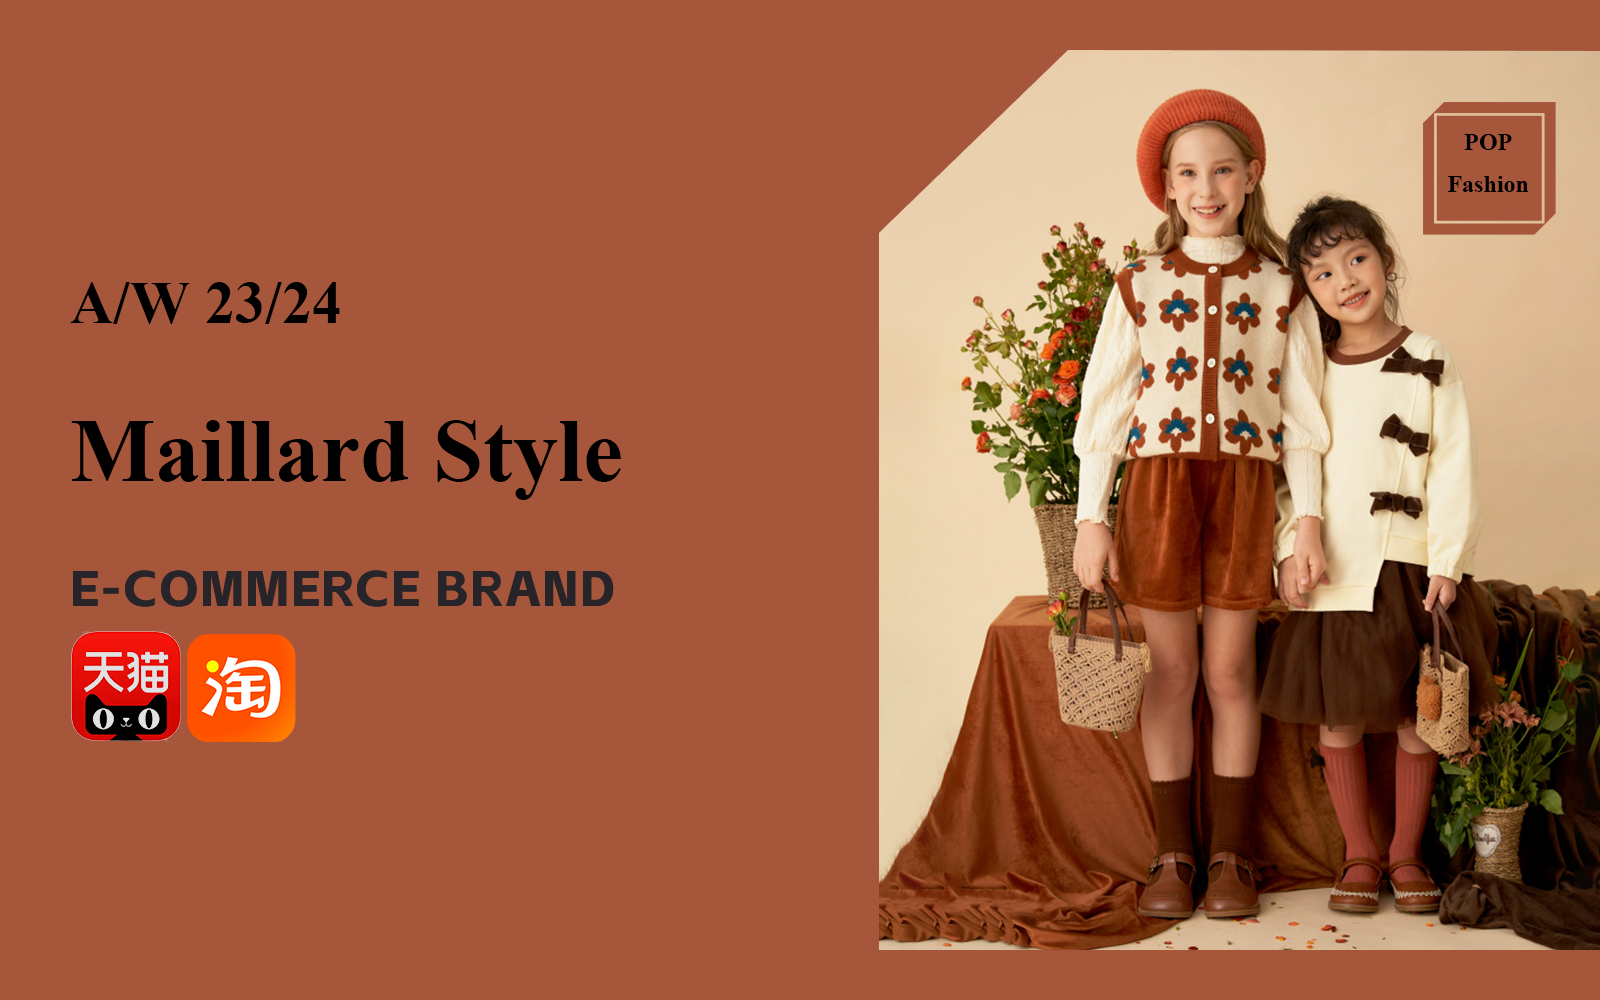 Maillard -- The Comprehensive Analysis of E-commerce Kidswear Brand